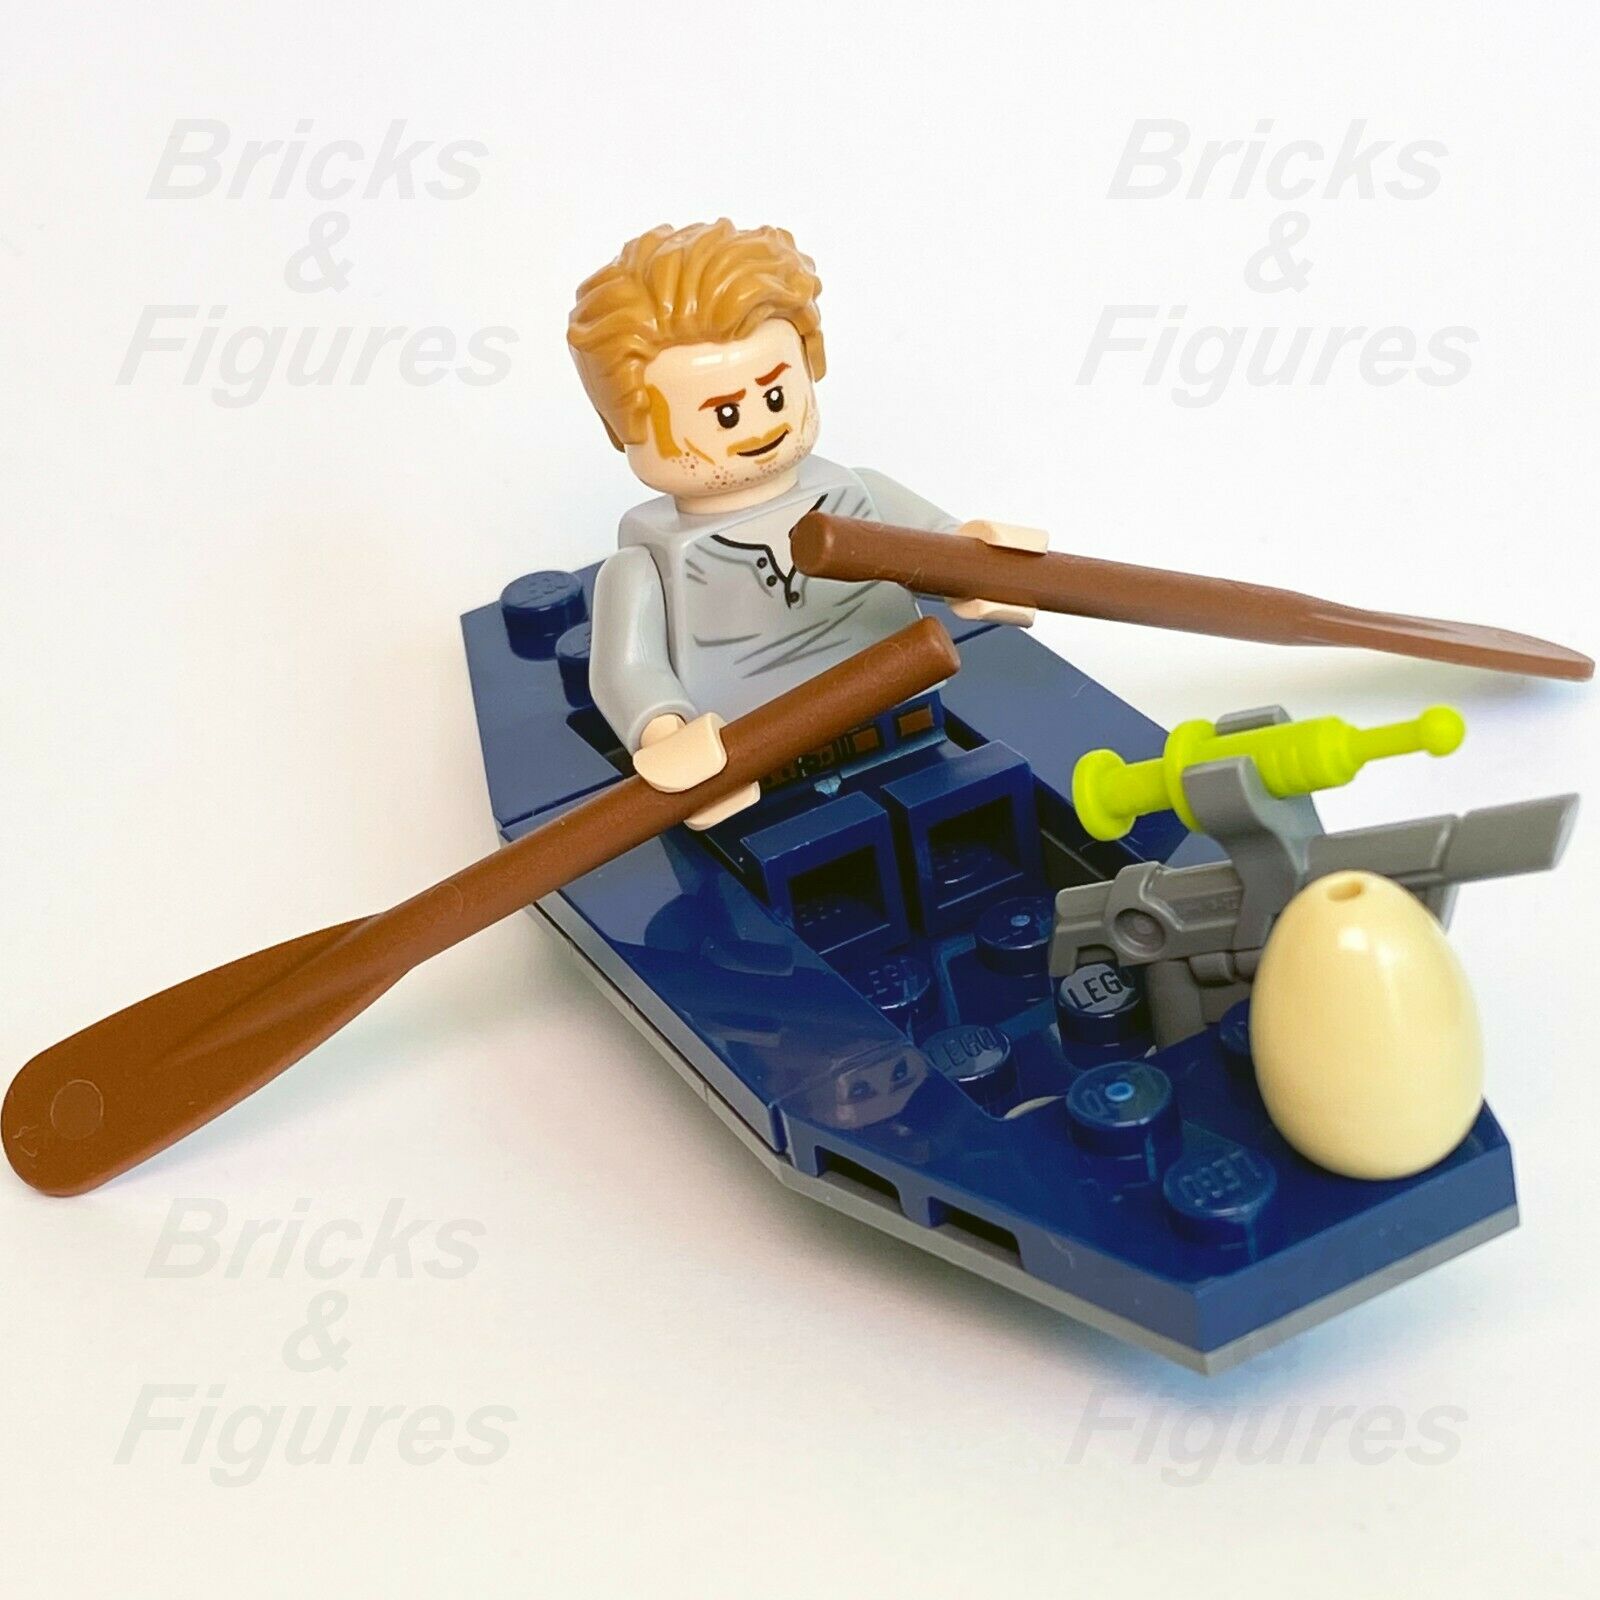 New Jurassic World LEGO Owen Grady with Kayak Foil Pack Set Minifigure  122007